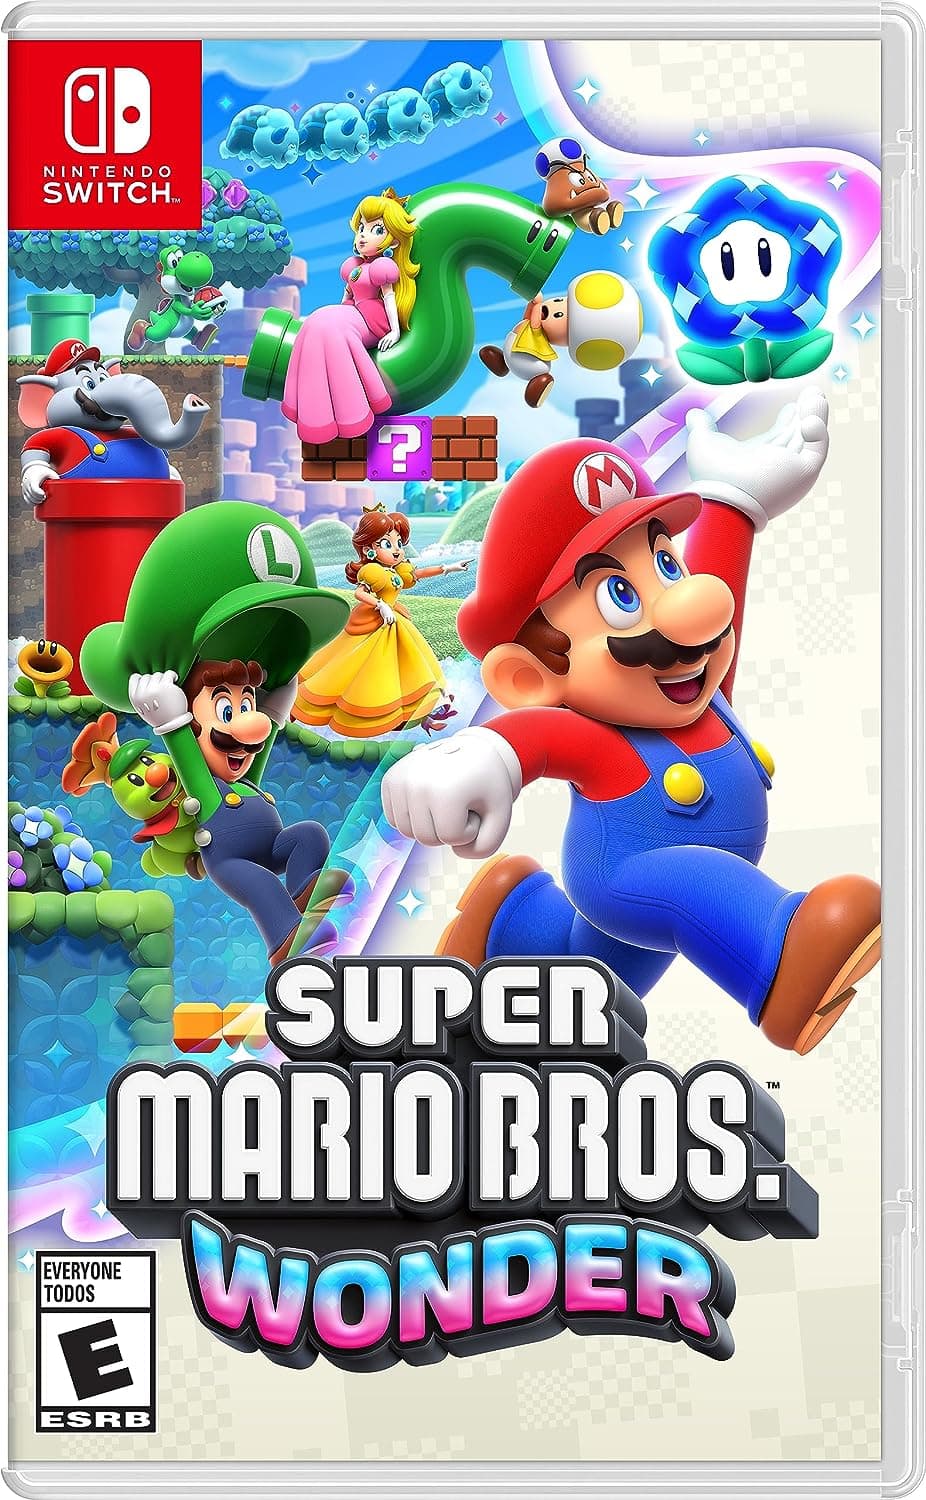 Super Mario Bros. Wonder for Nintendo Switch.